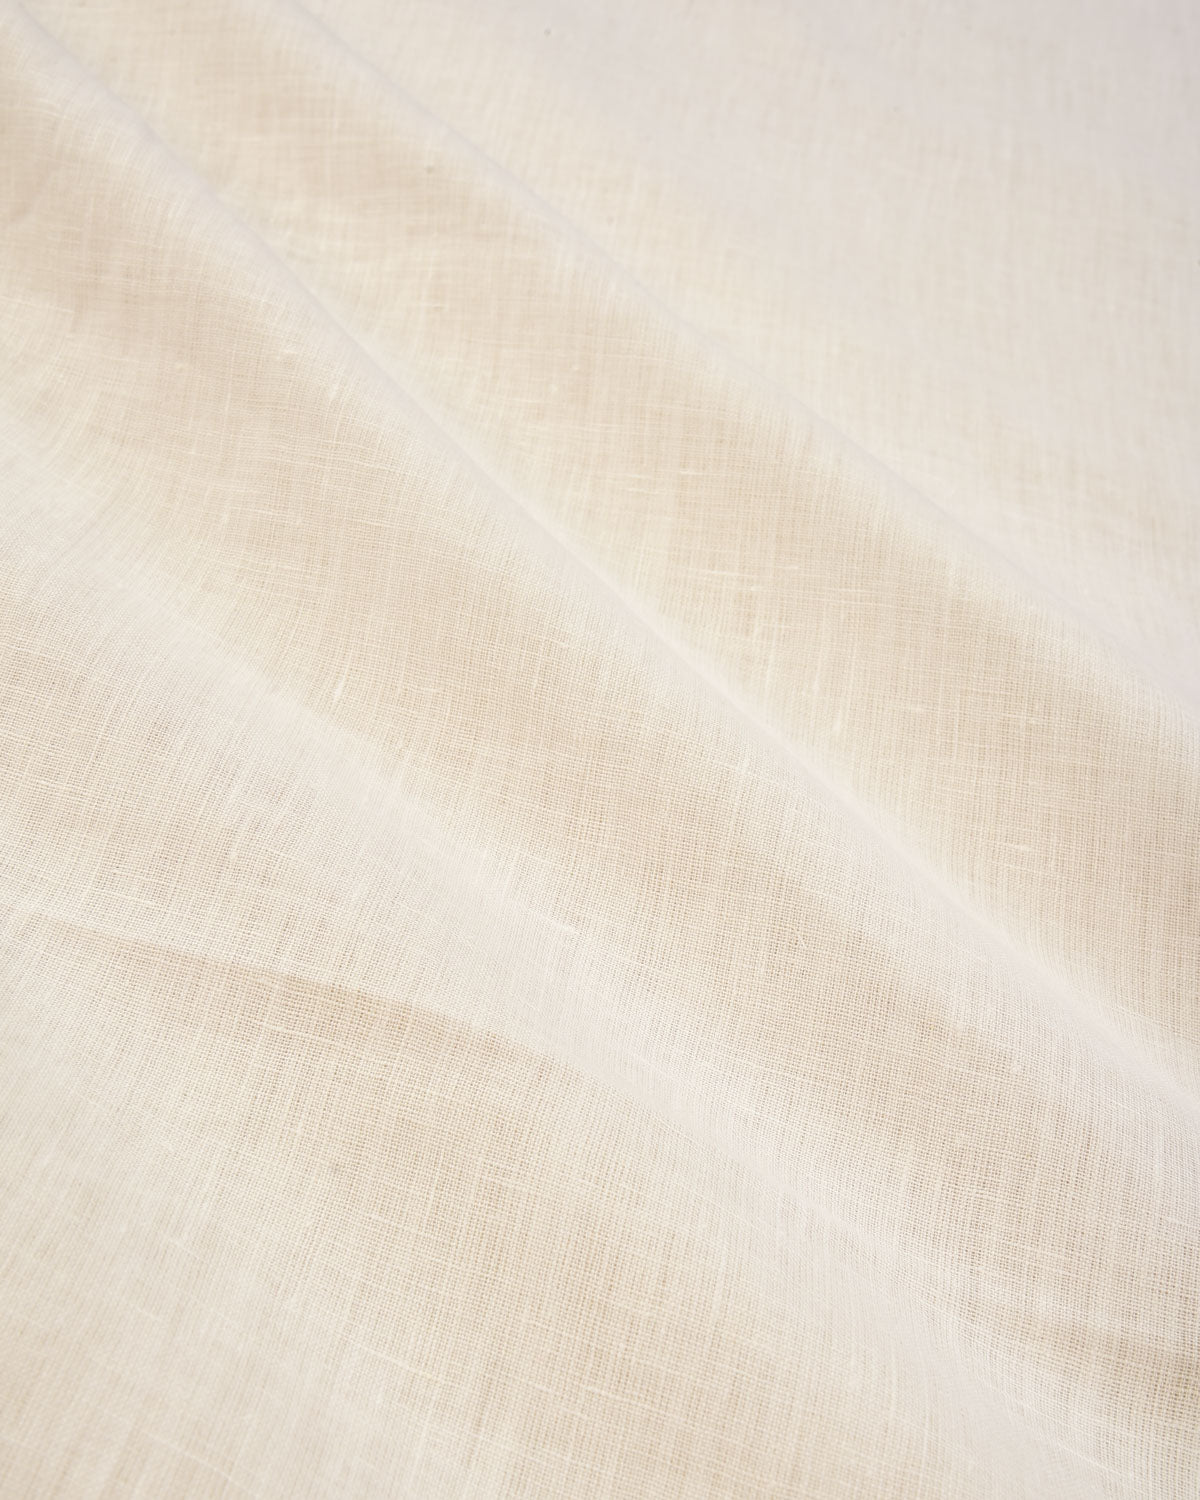 White Woven Linen Cotton Fabric - By HolyWeaves, Benares